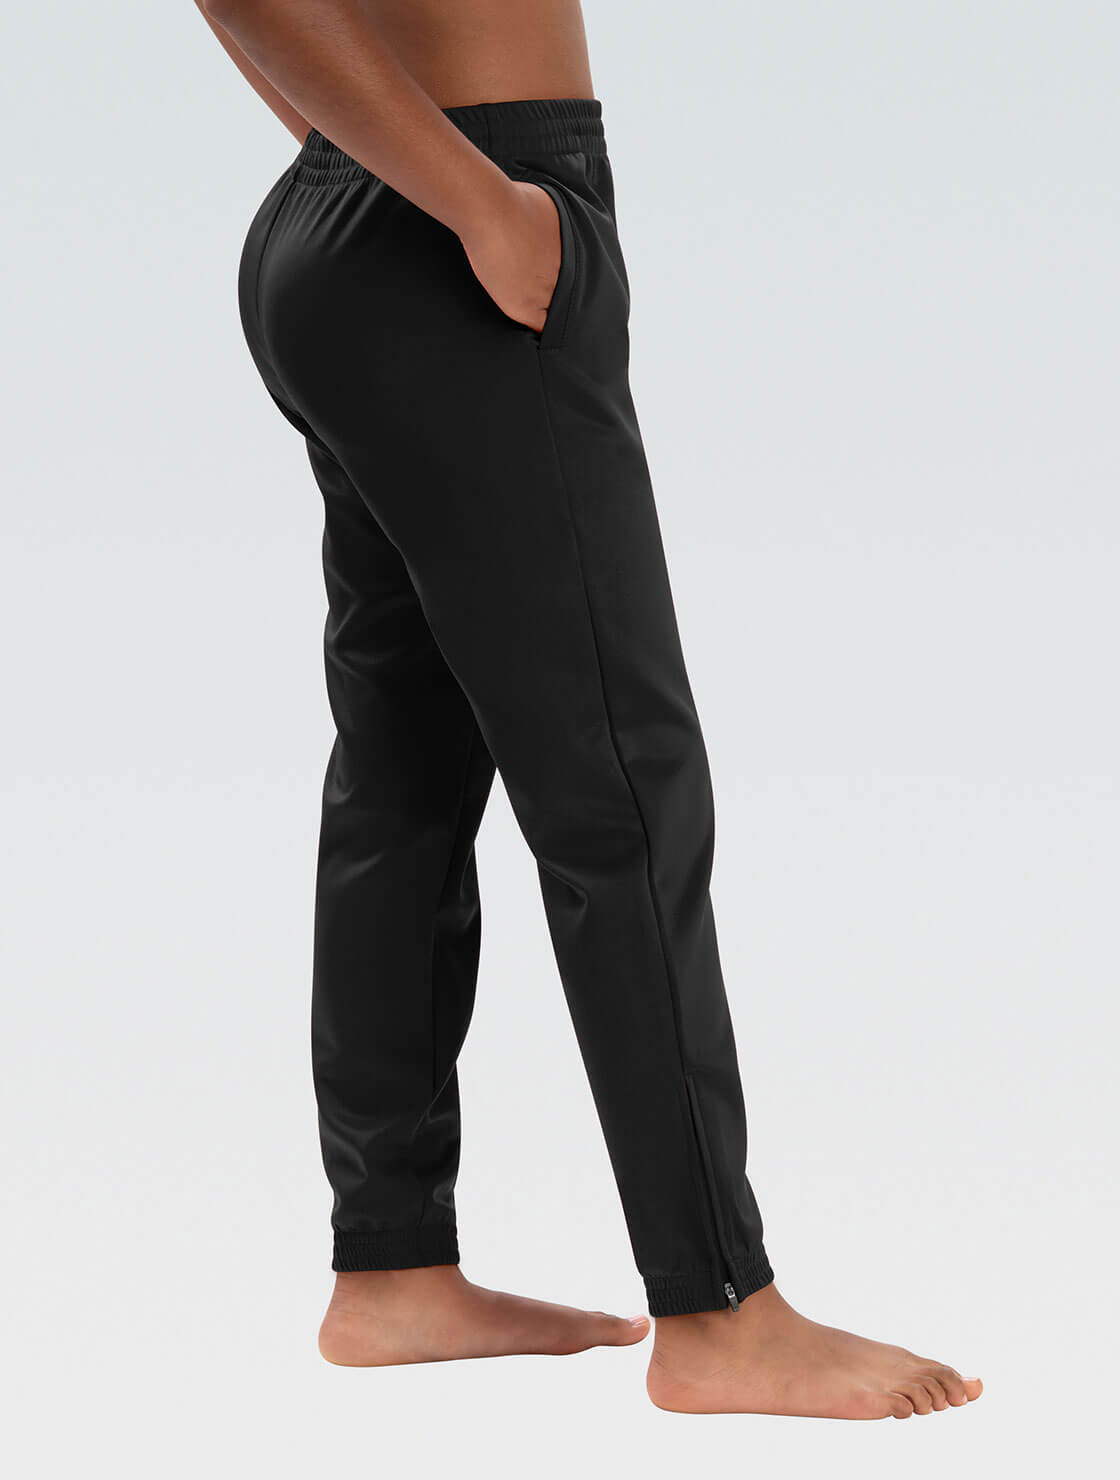 Black Unisex Slim Fit Warm-Up Pant - Team Apparel